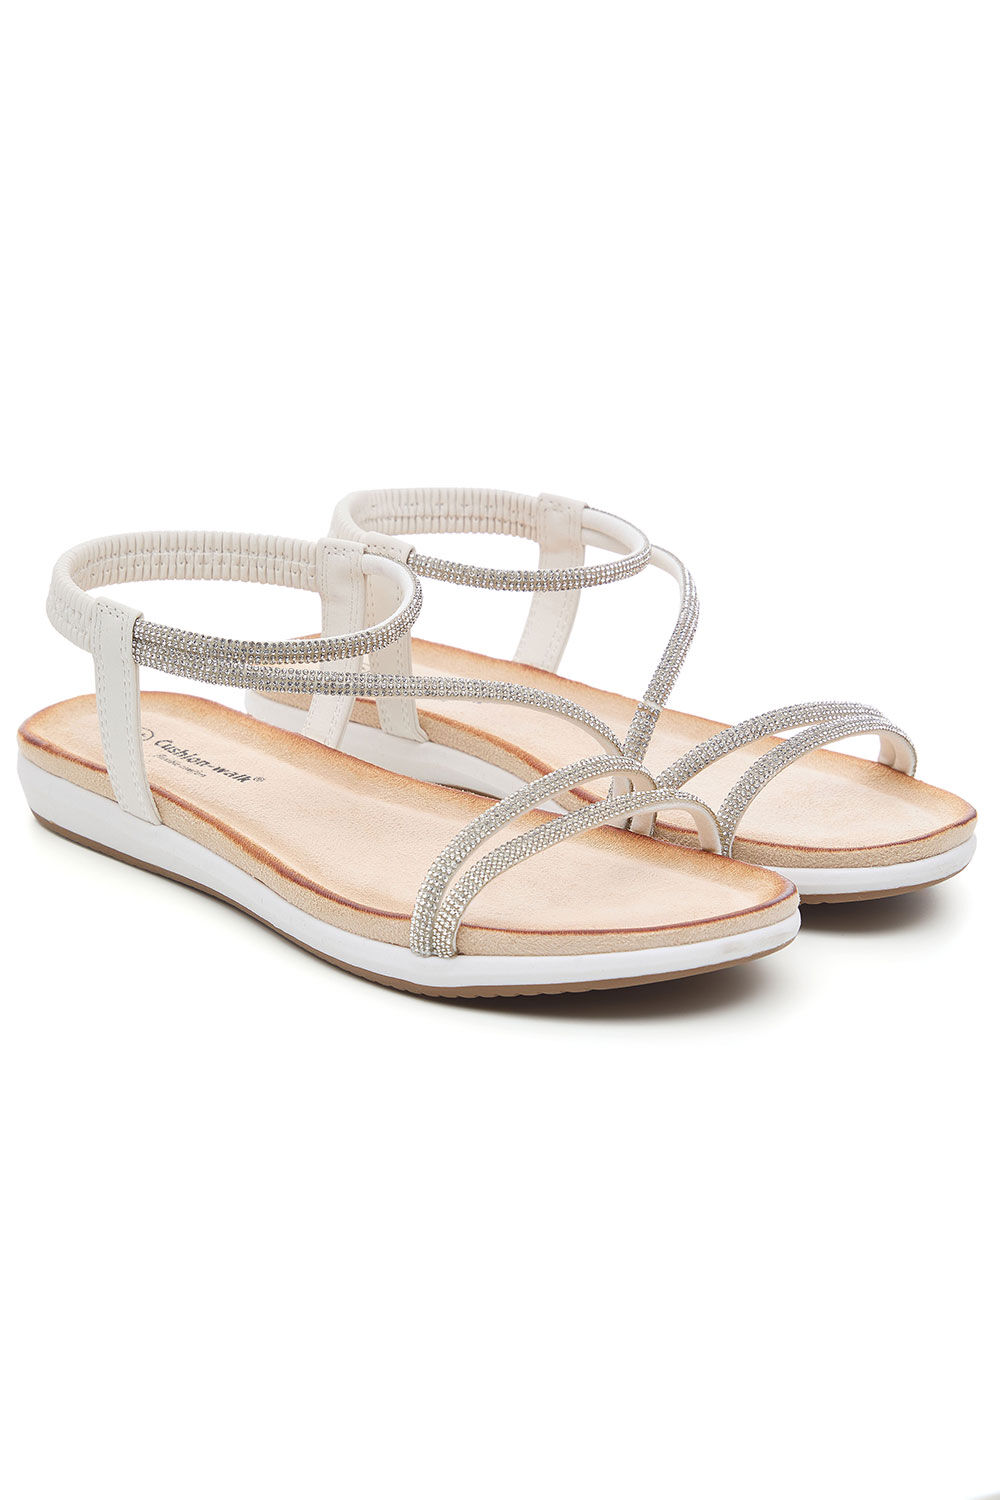 Bonmarche White Diamante Strap Elasticated Back Sandals, Size: 8 - Summer Dresses